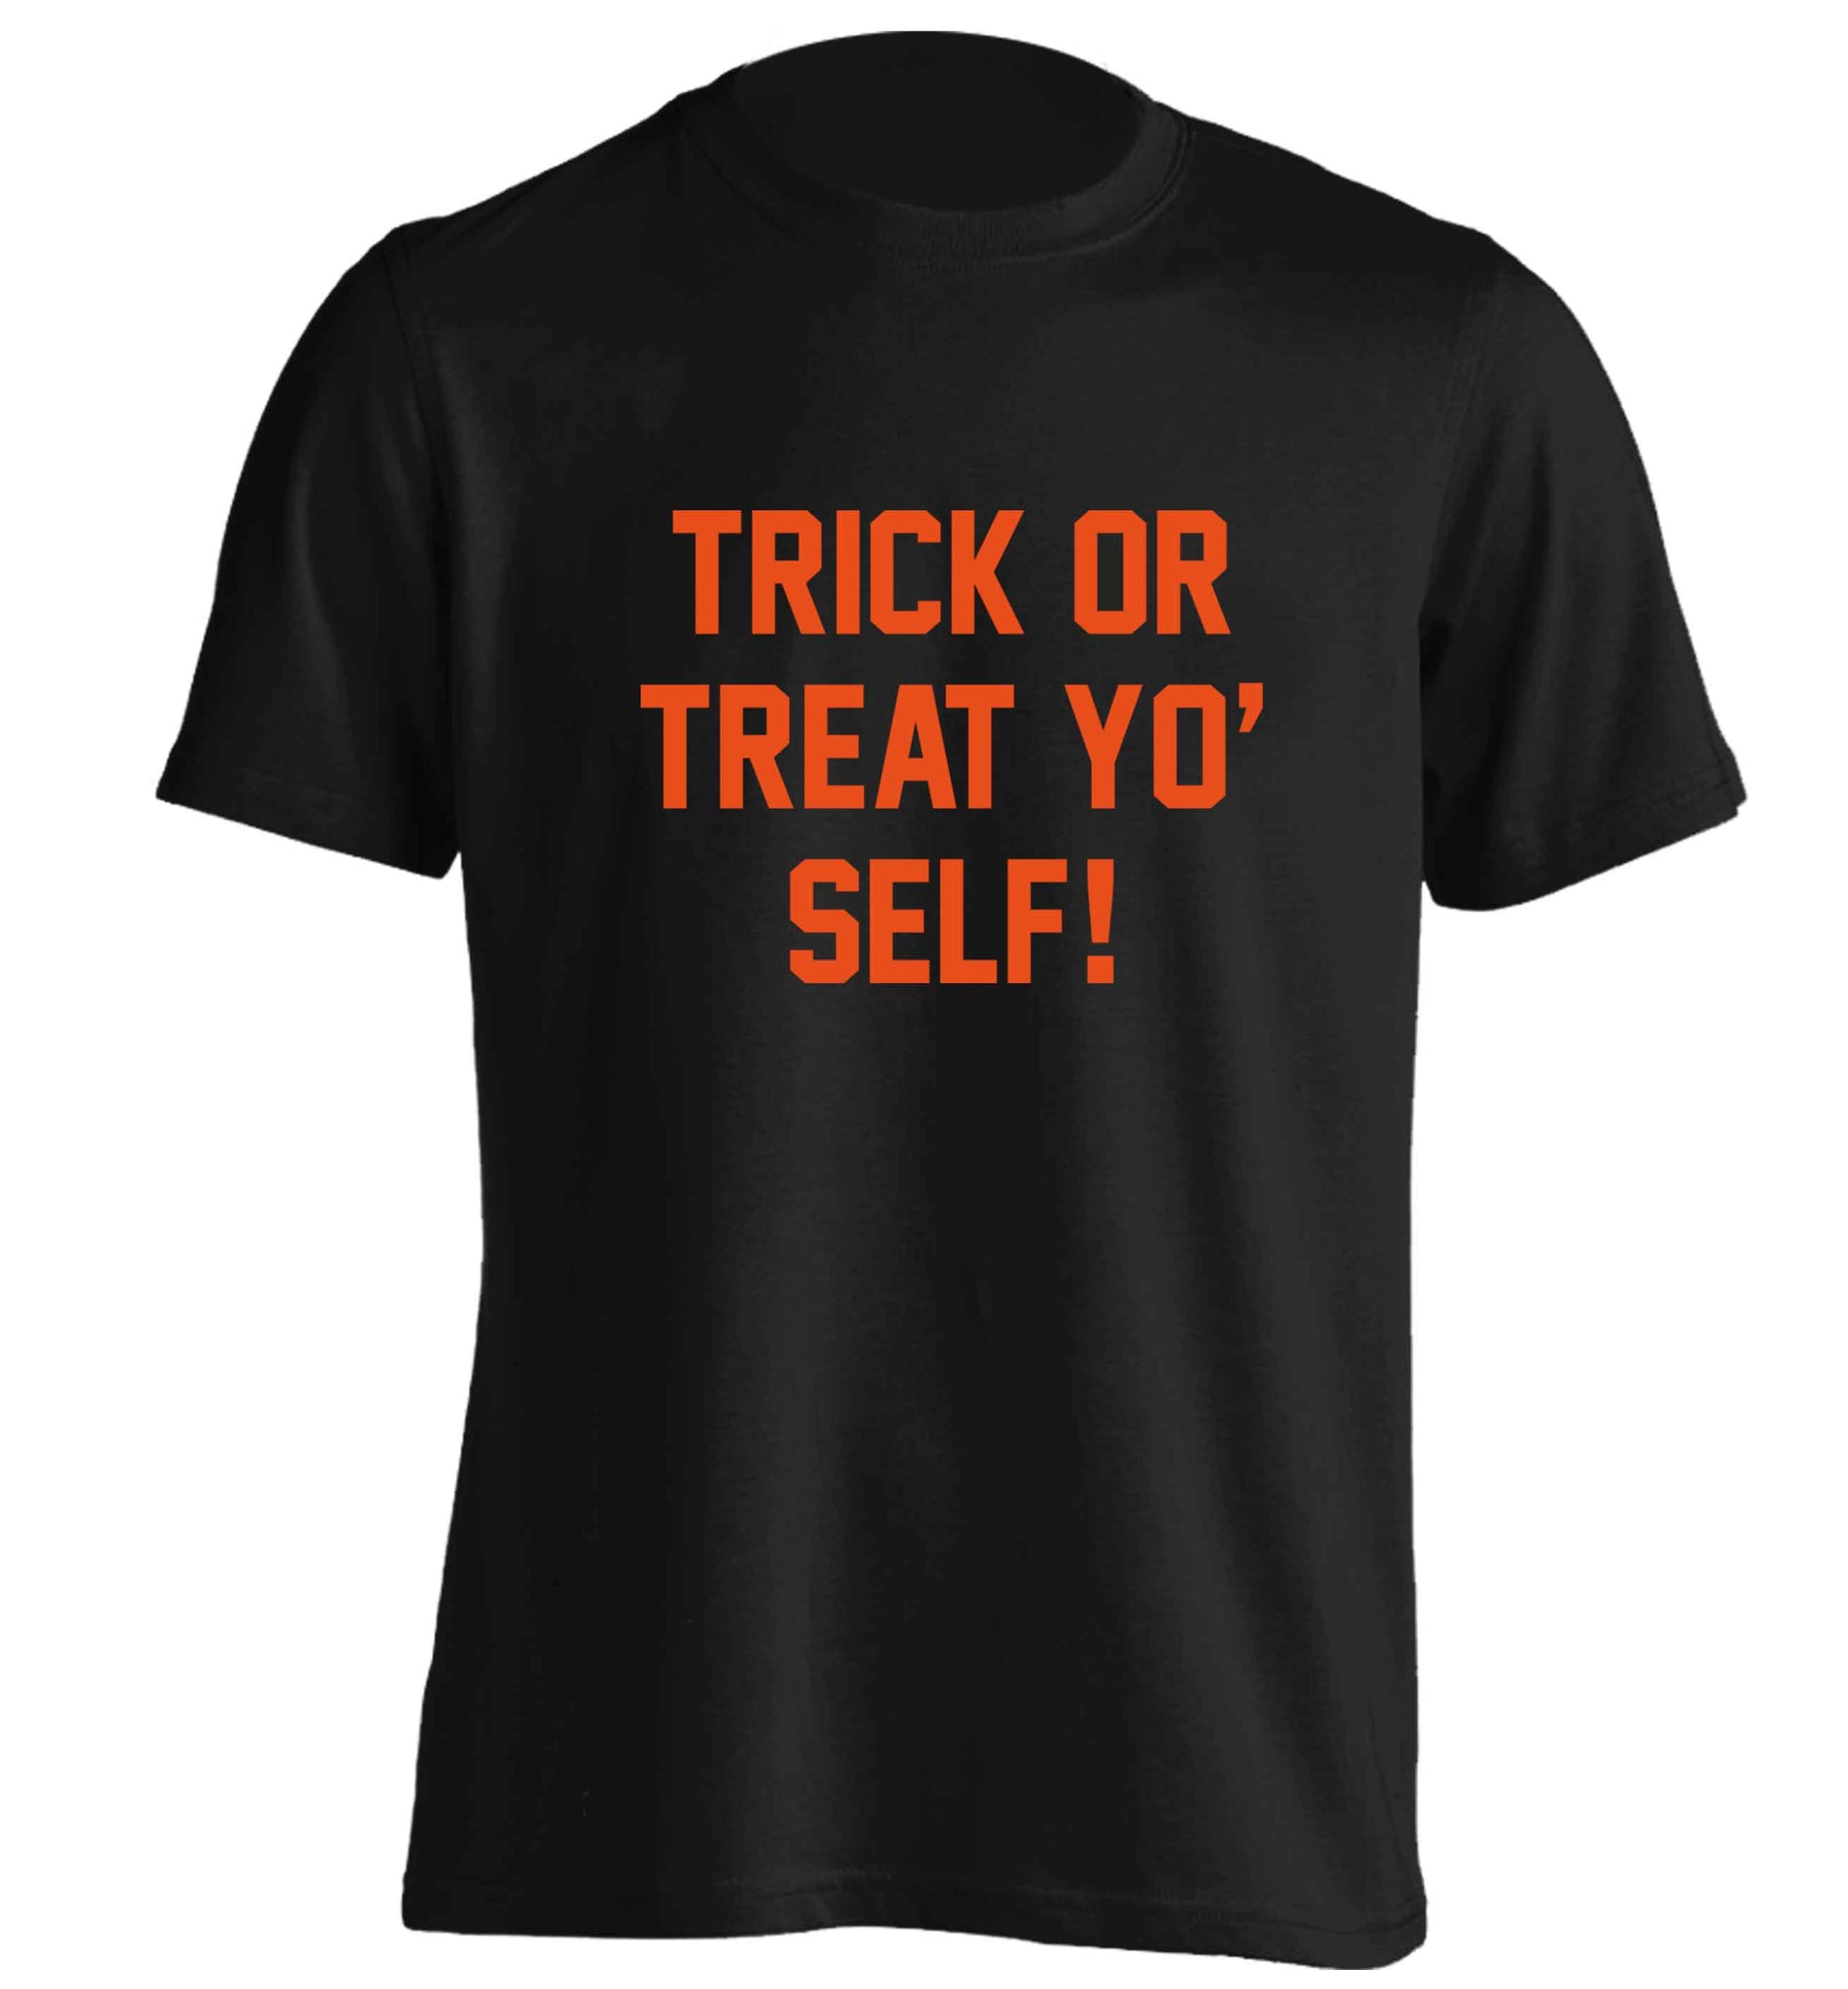 Trick or Treat Yo' Self adults unisex black Tshirt 2XL